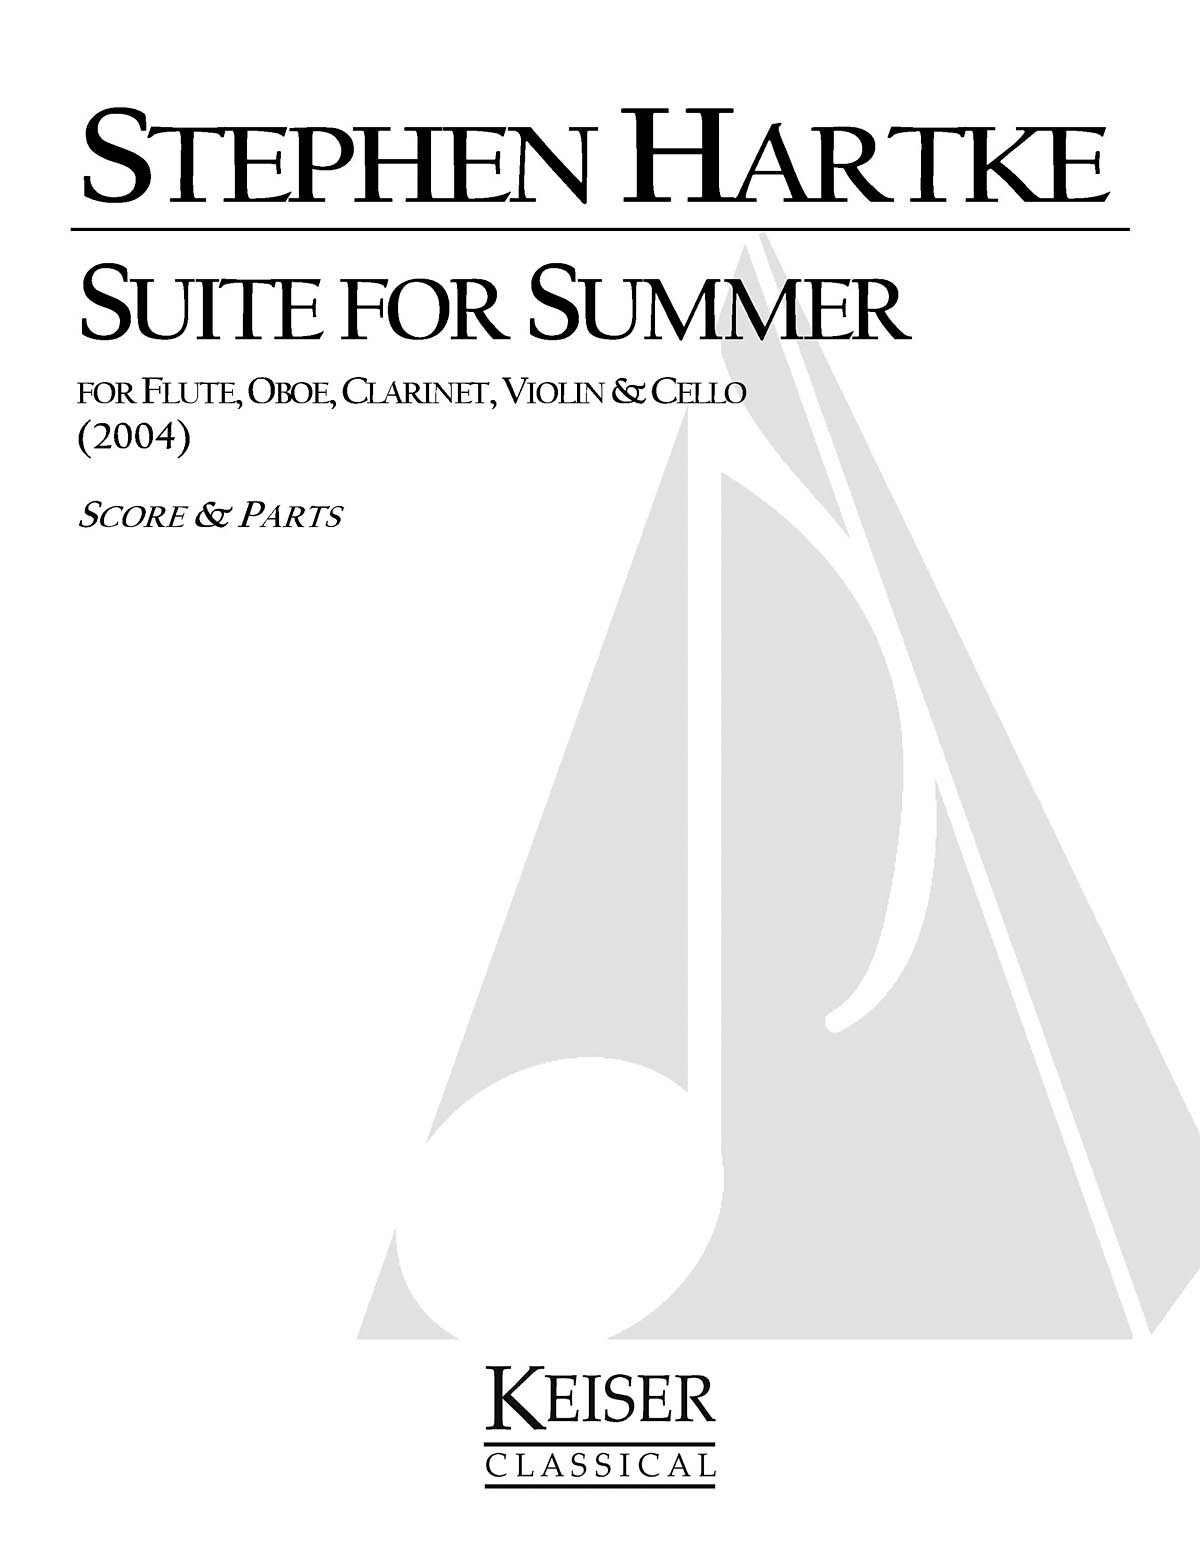 Stephen Hartke: Suite for Summer: Cello Solo: Part